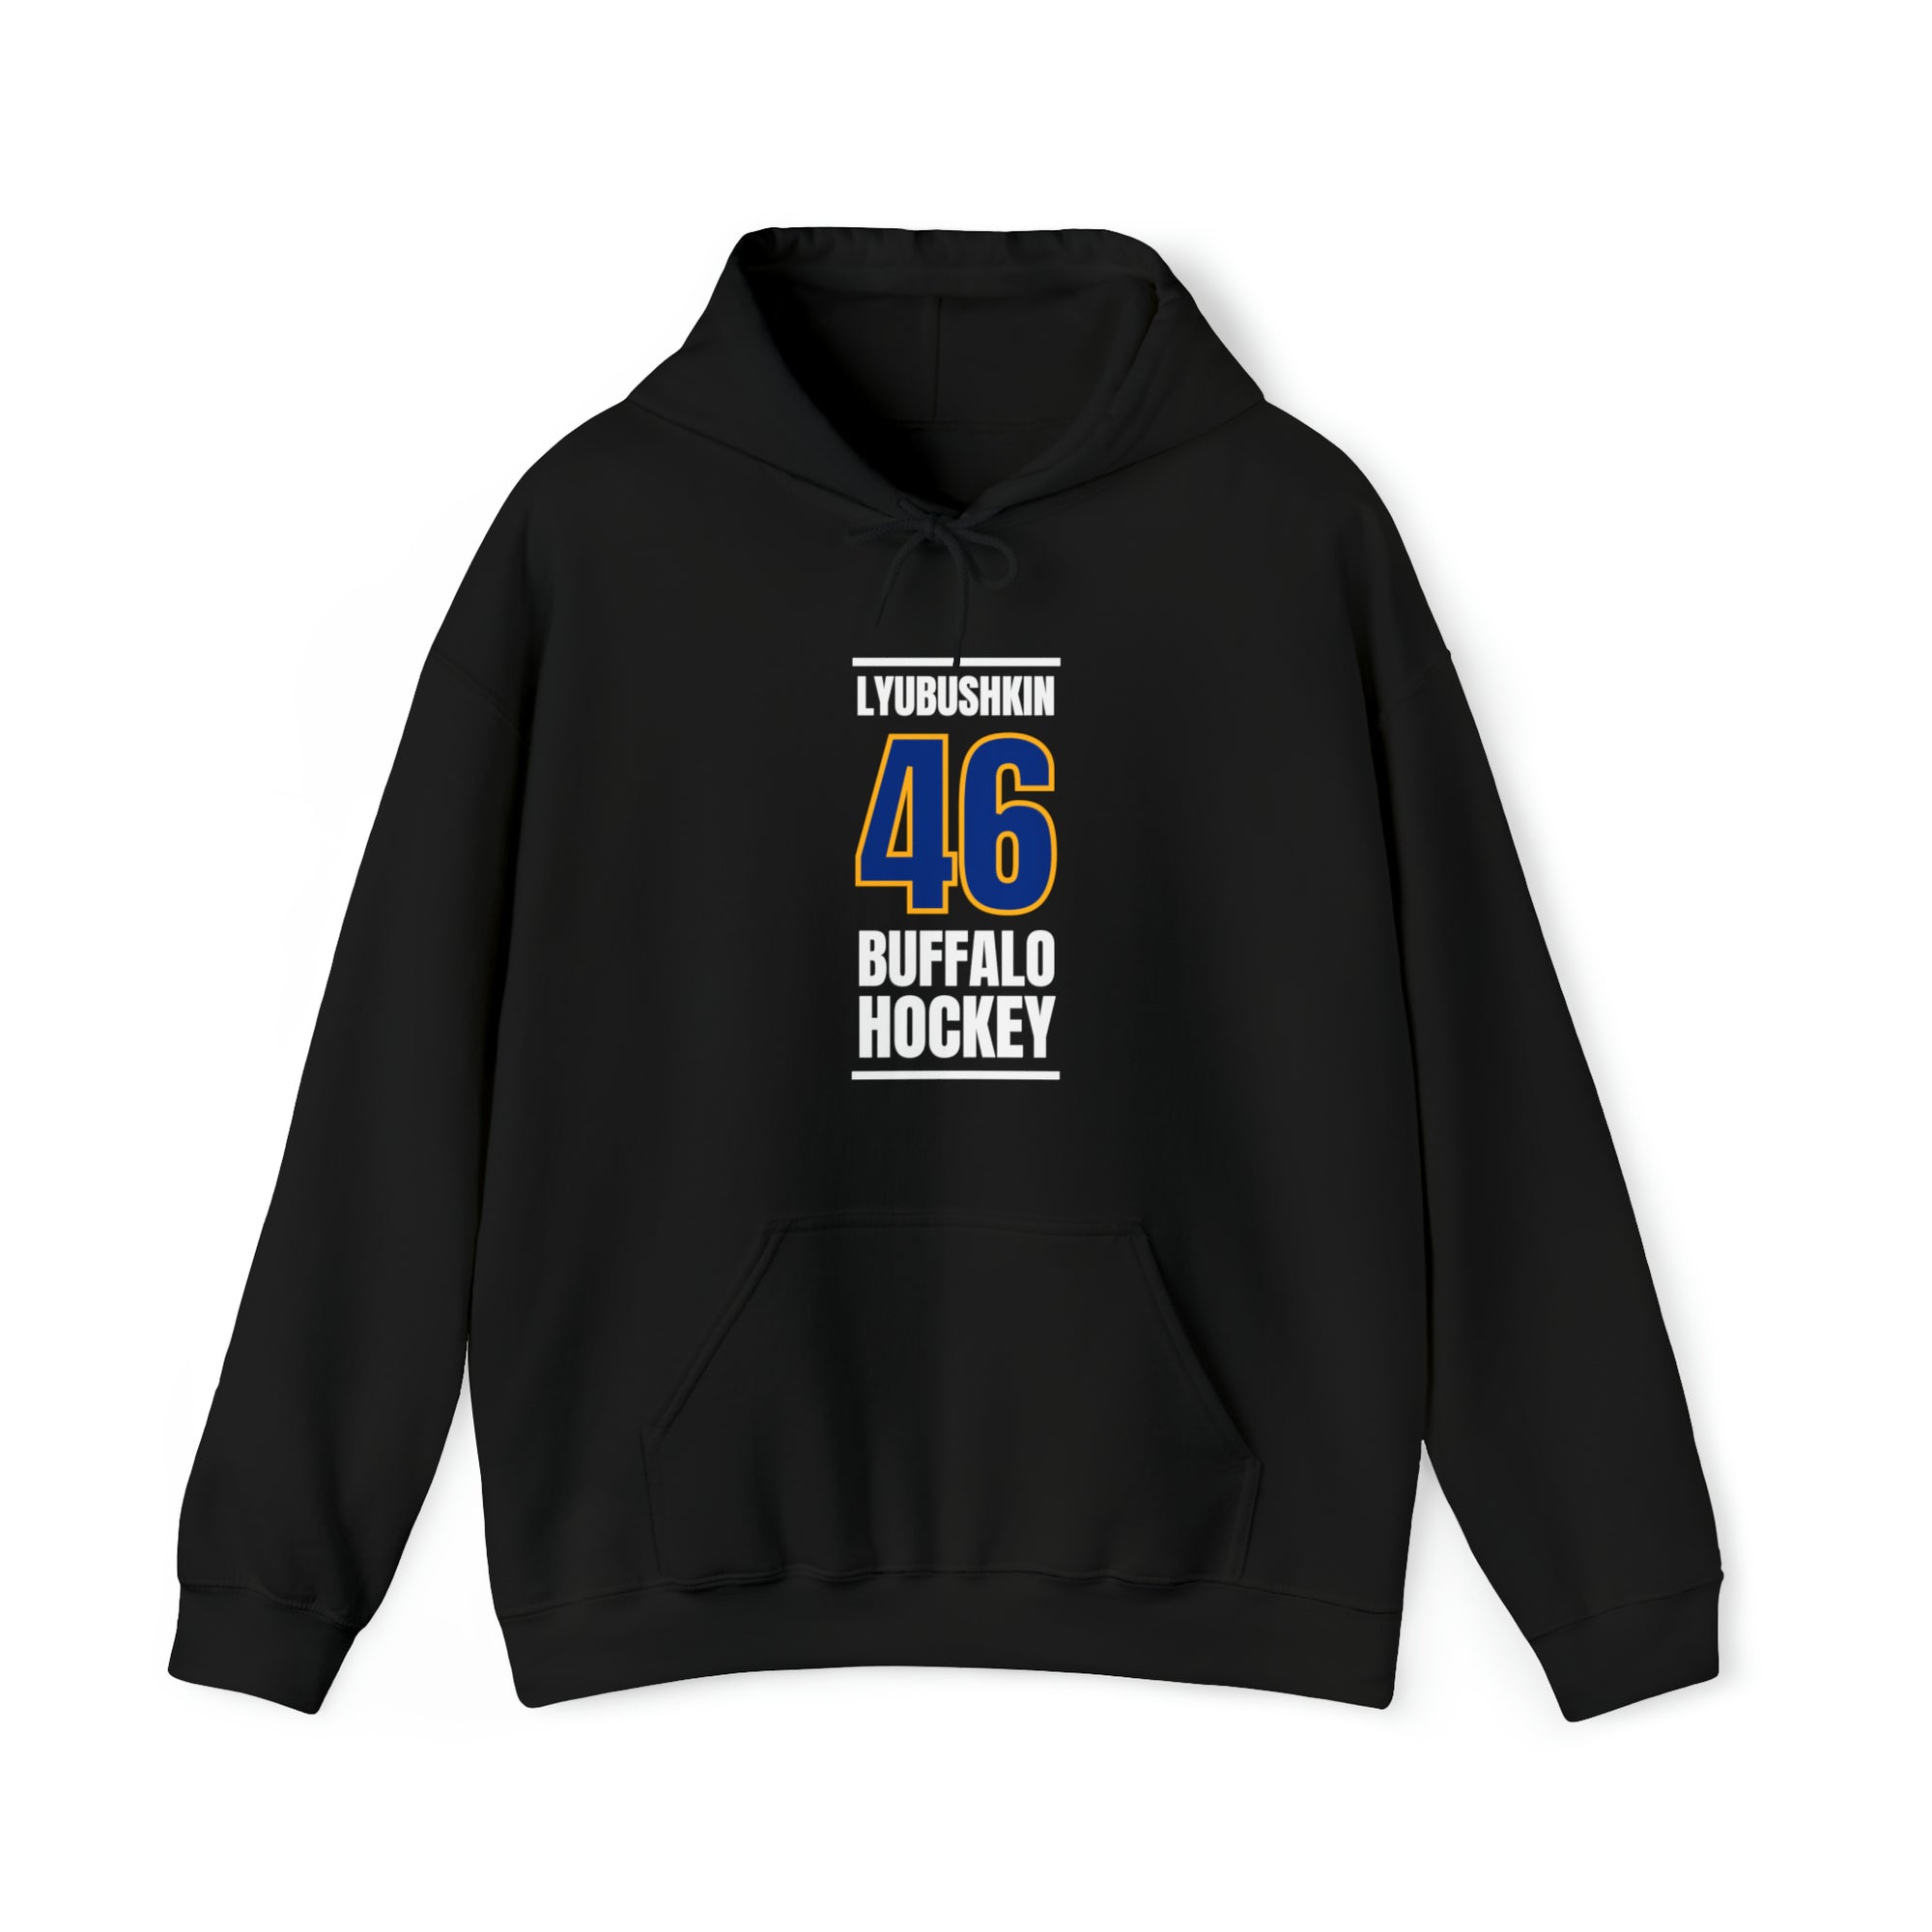 Lyubushkin 46 Buffalo Hockey Royal Blue Vertical Design Unisex Hooded Sweatshirt